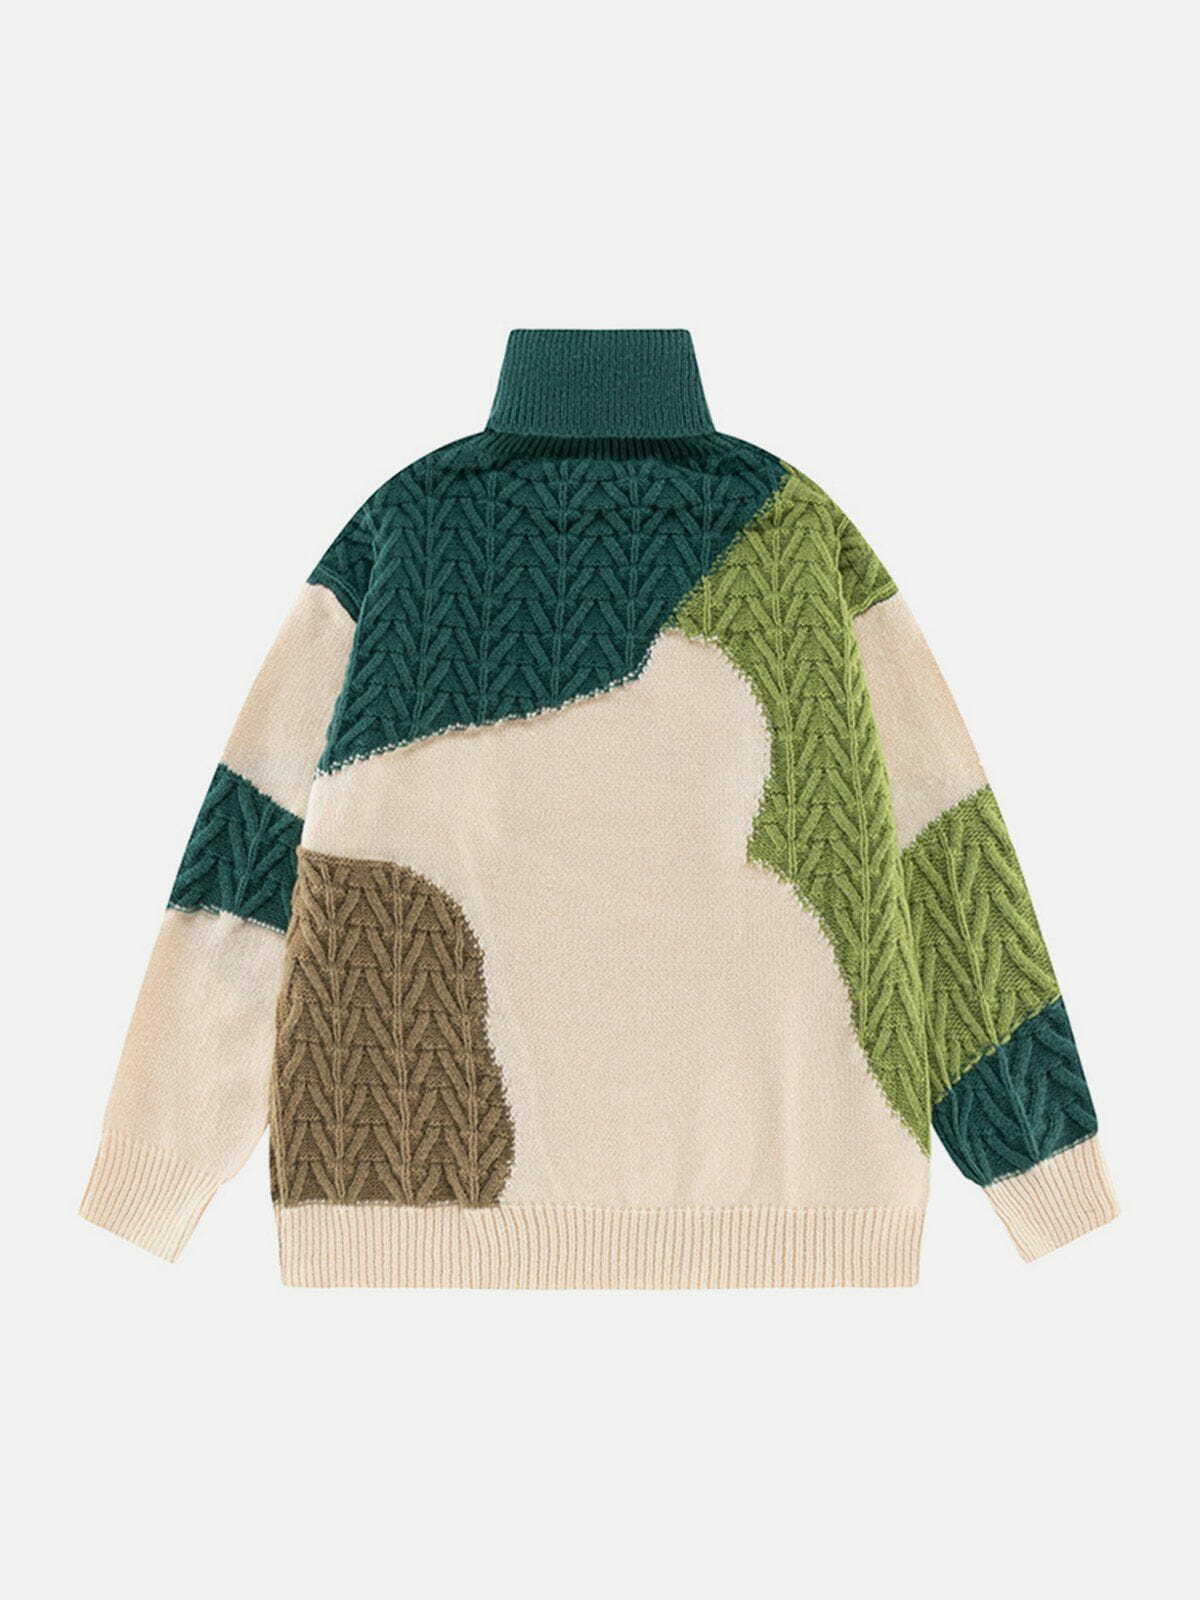 patchwork stitch turtleneck sweater edgy & retro streetwear glamour 2971